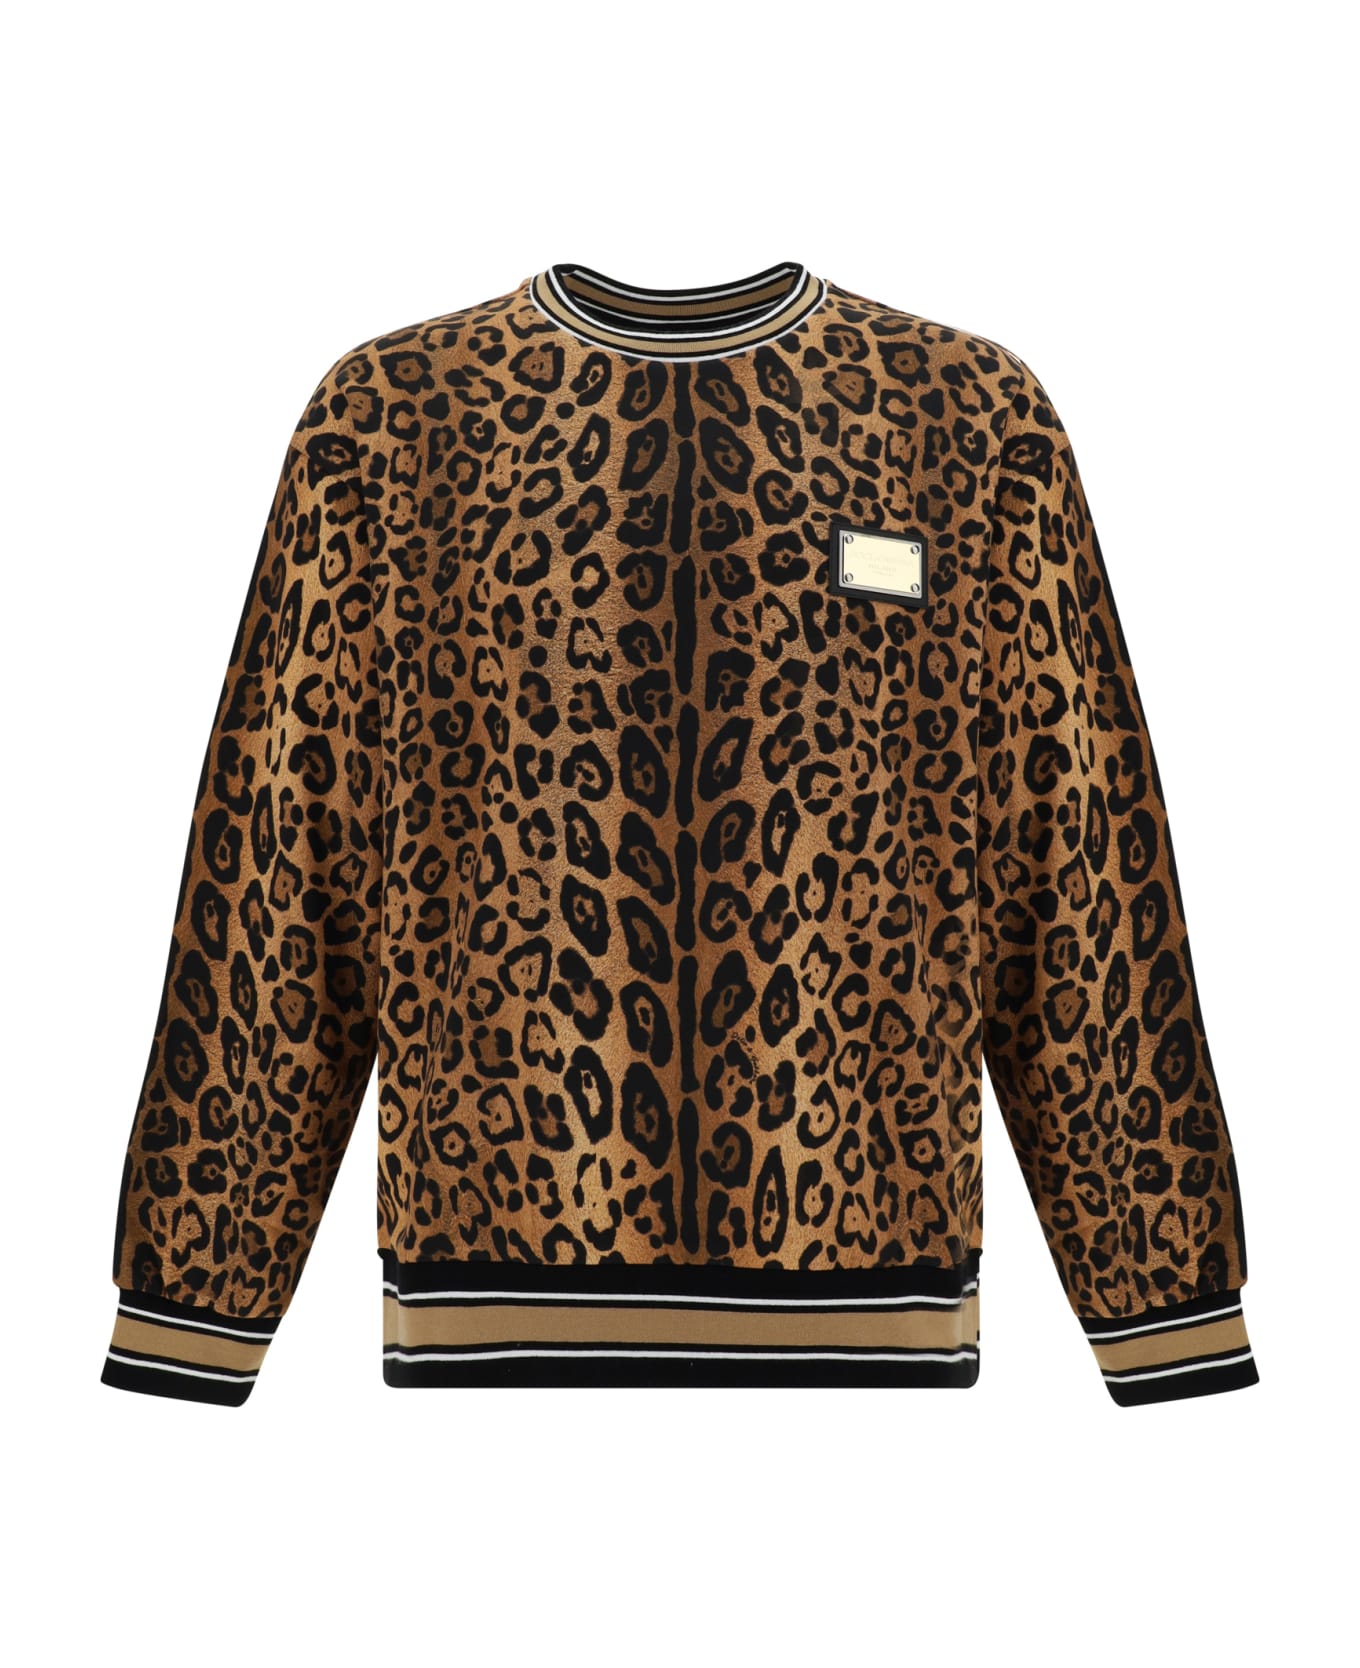 Dolce & Gabbana Sweatshirt - BROWN/BLACK